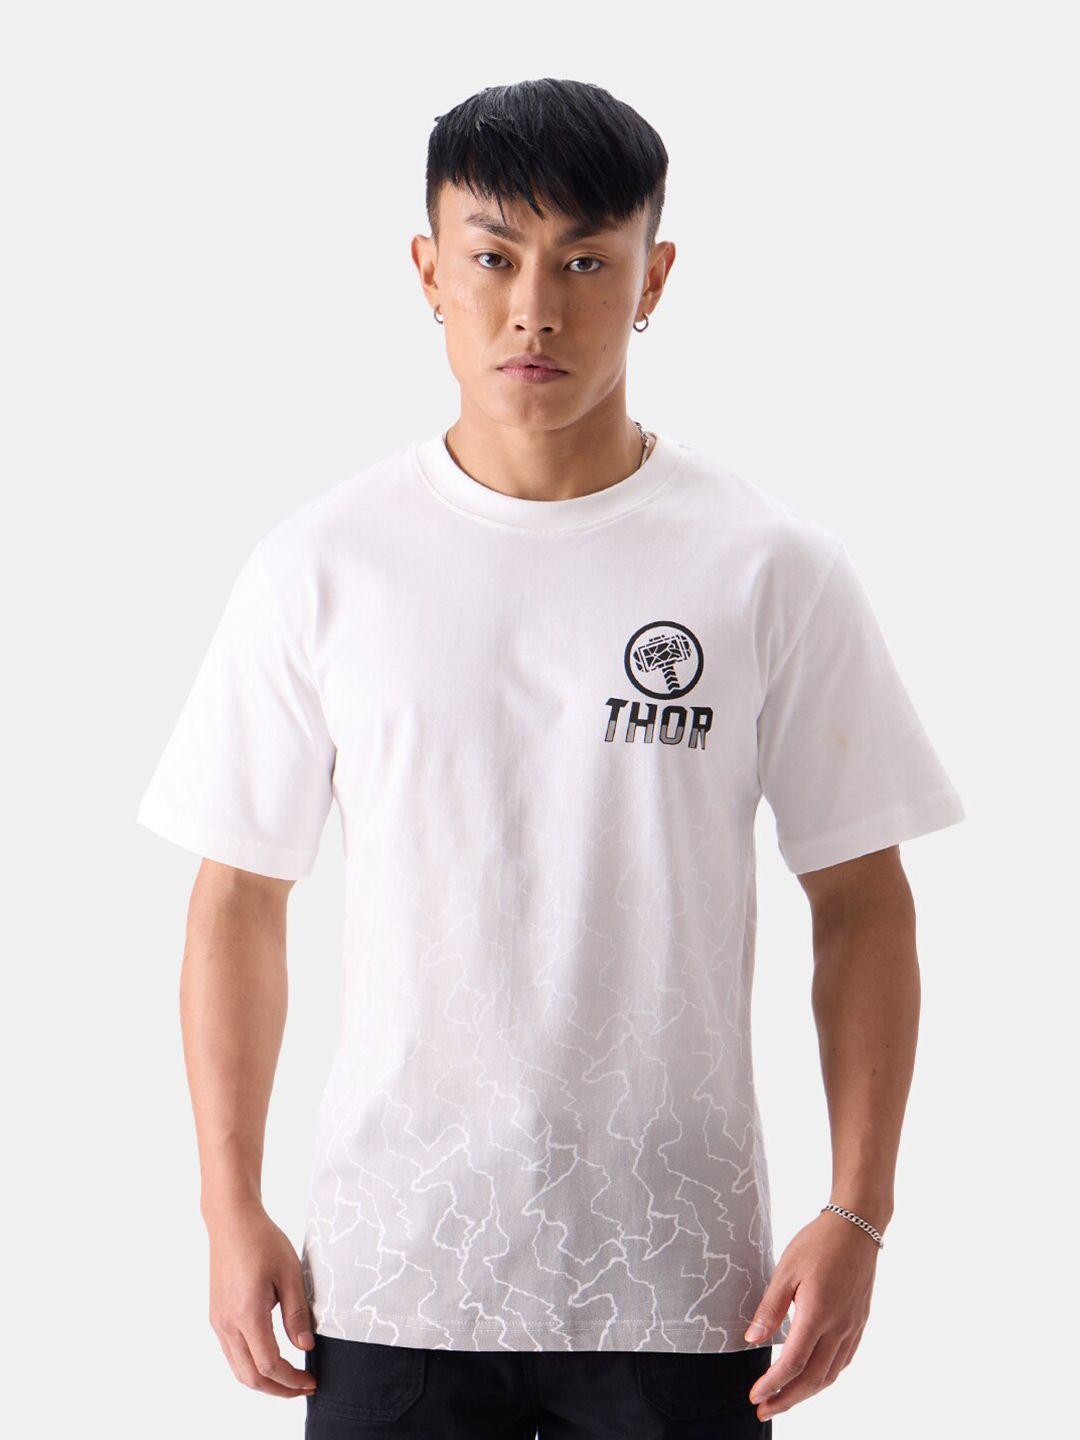 the souled store men white applique t-shirt